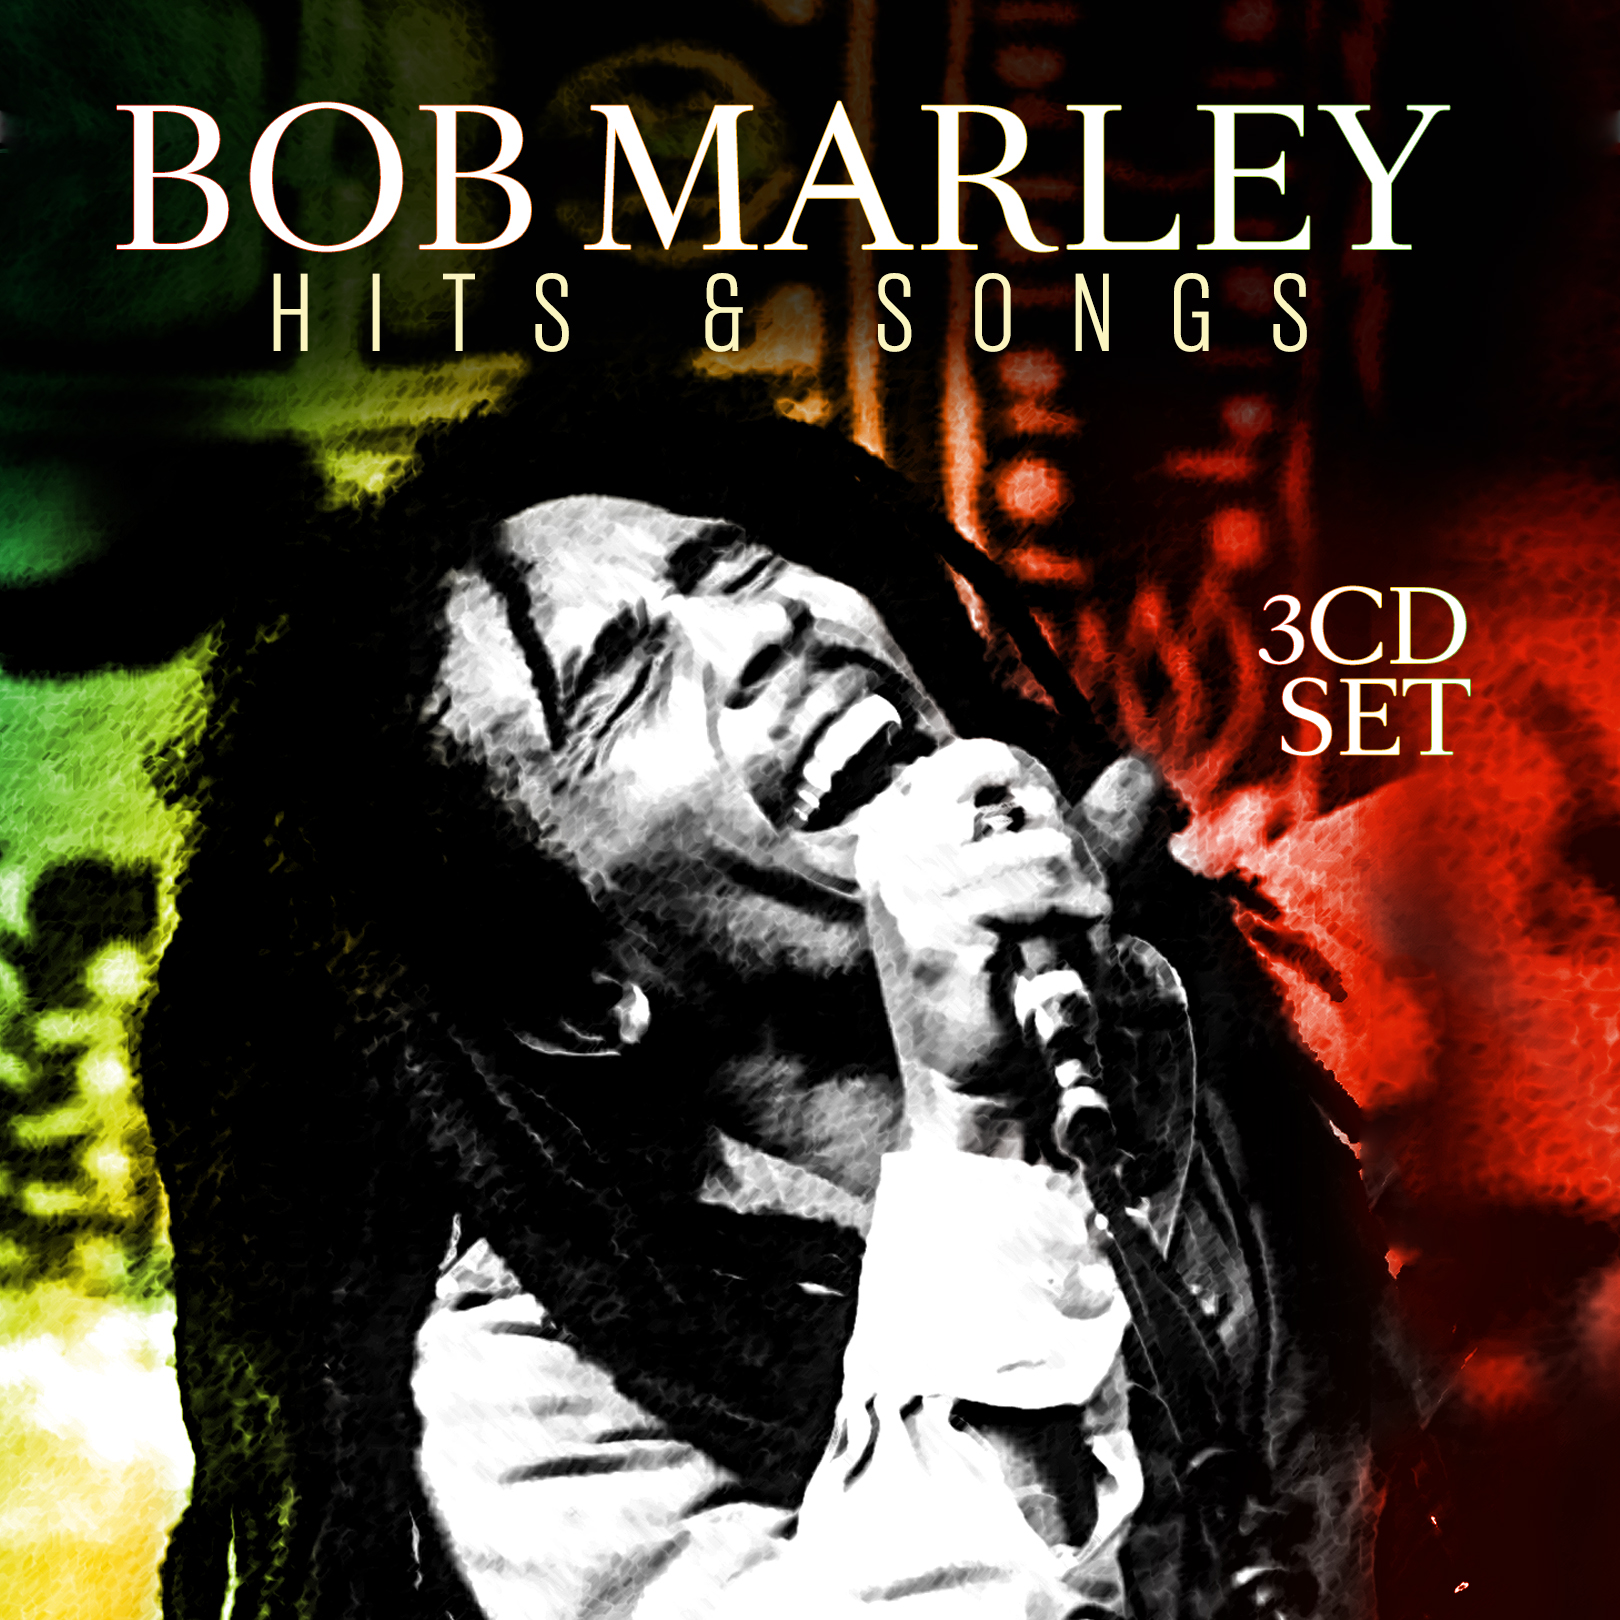 CD Bob Marley Hits and Songs 3CDs 90204687879 | eBay1620 x 1620